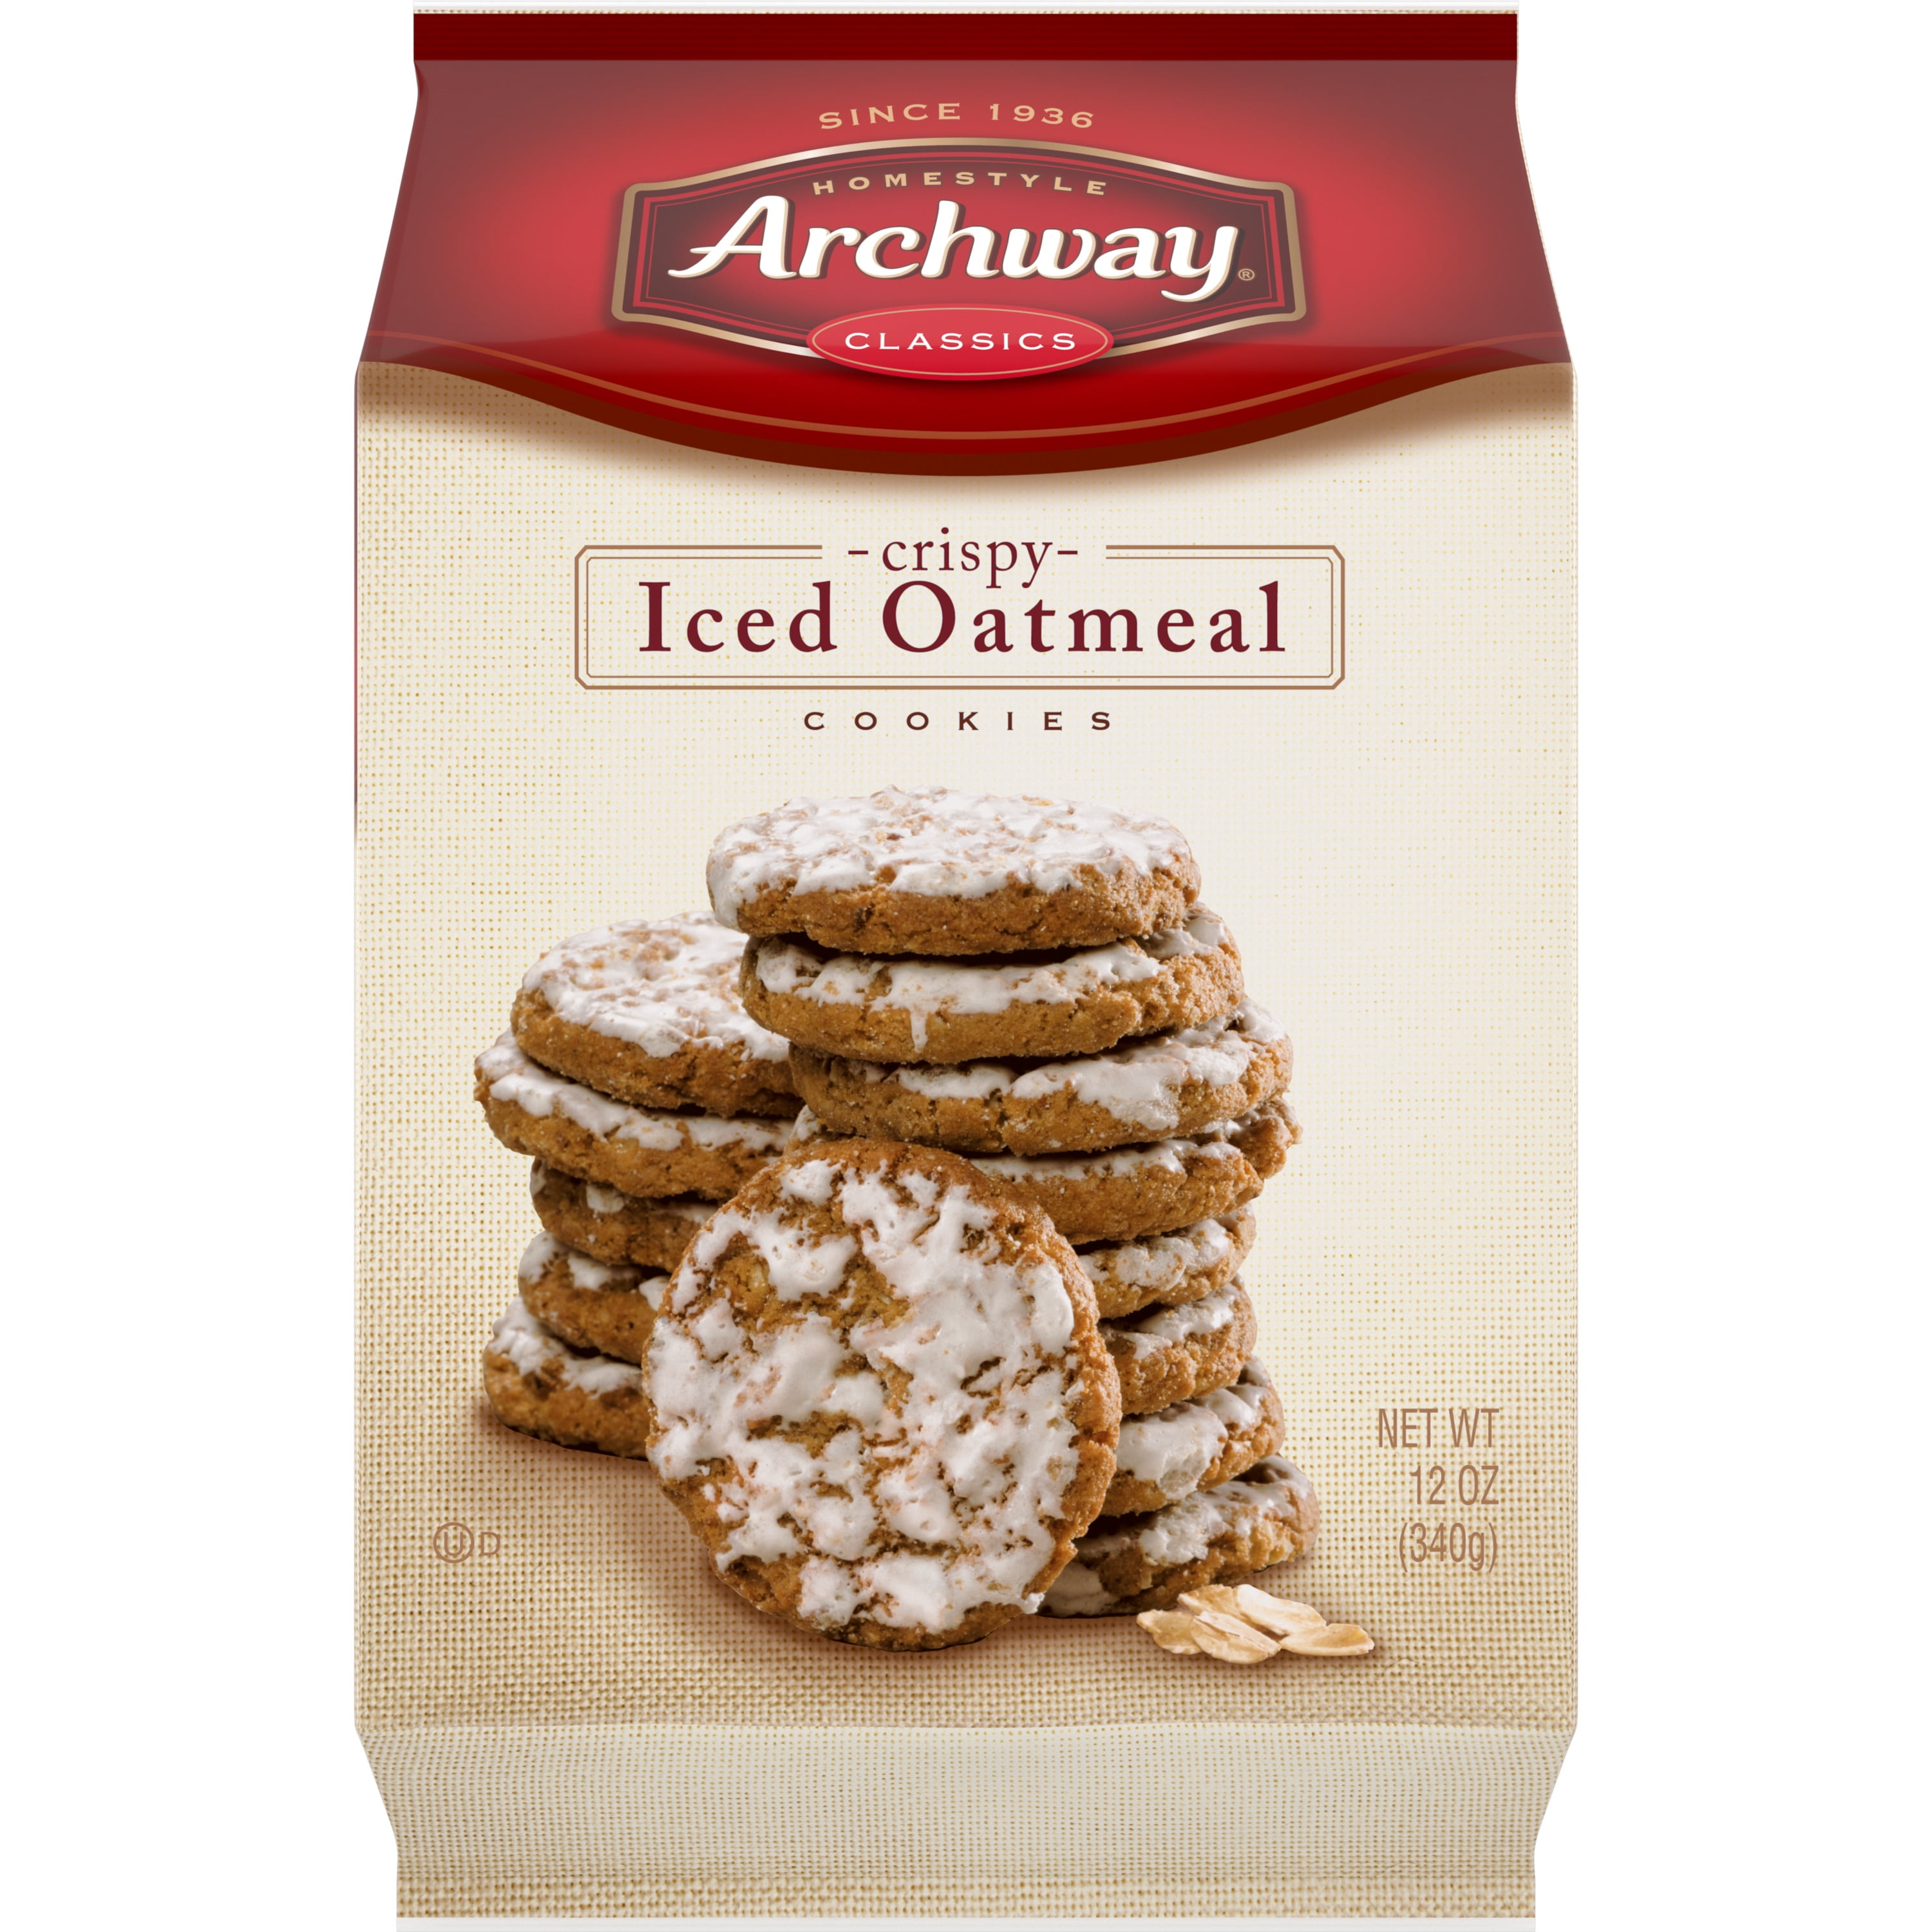 Archway Crispy Iced Oatmeal Cookies, 12 Oz - Walmart.com - Walmart.com